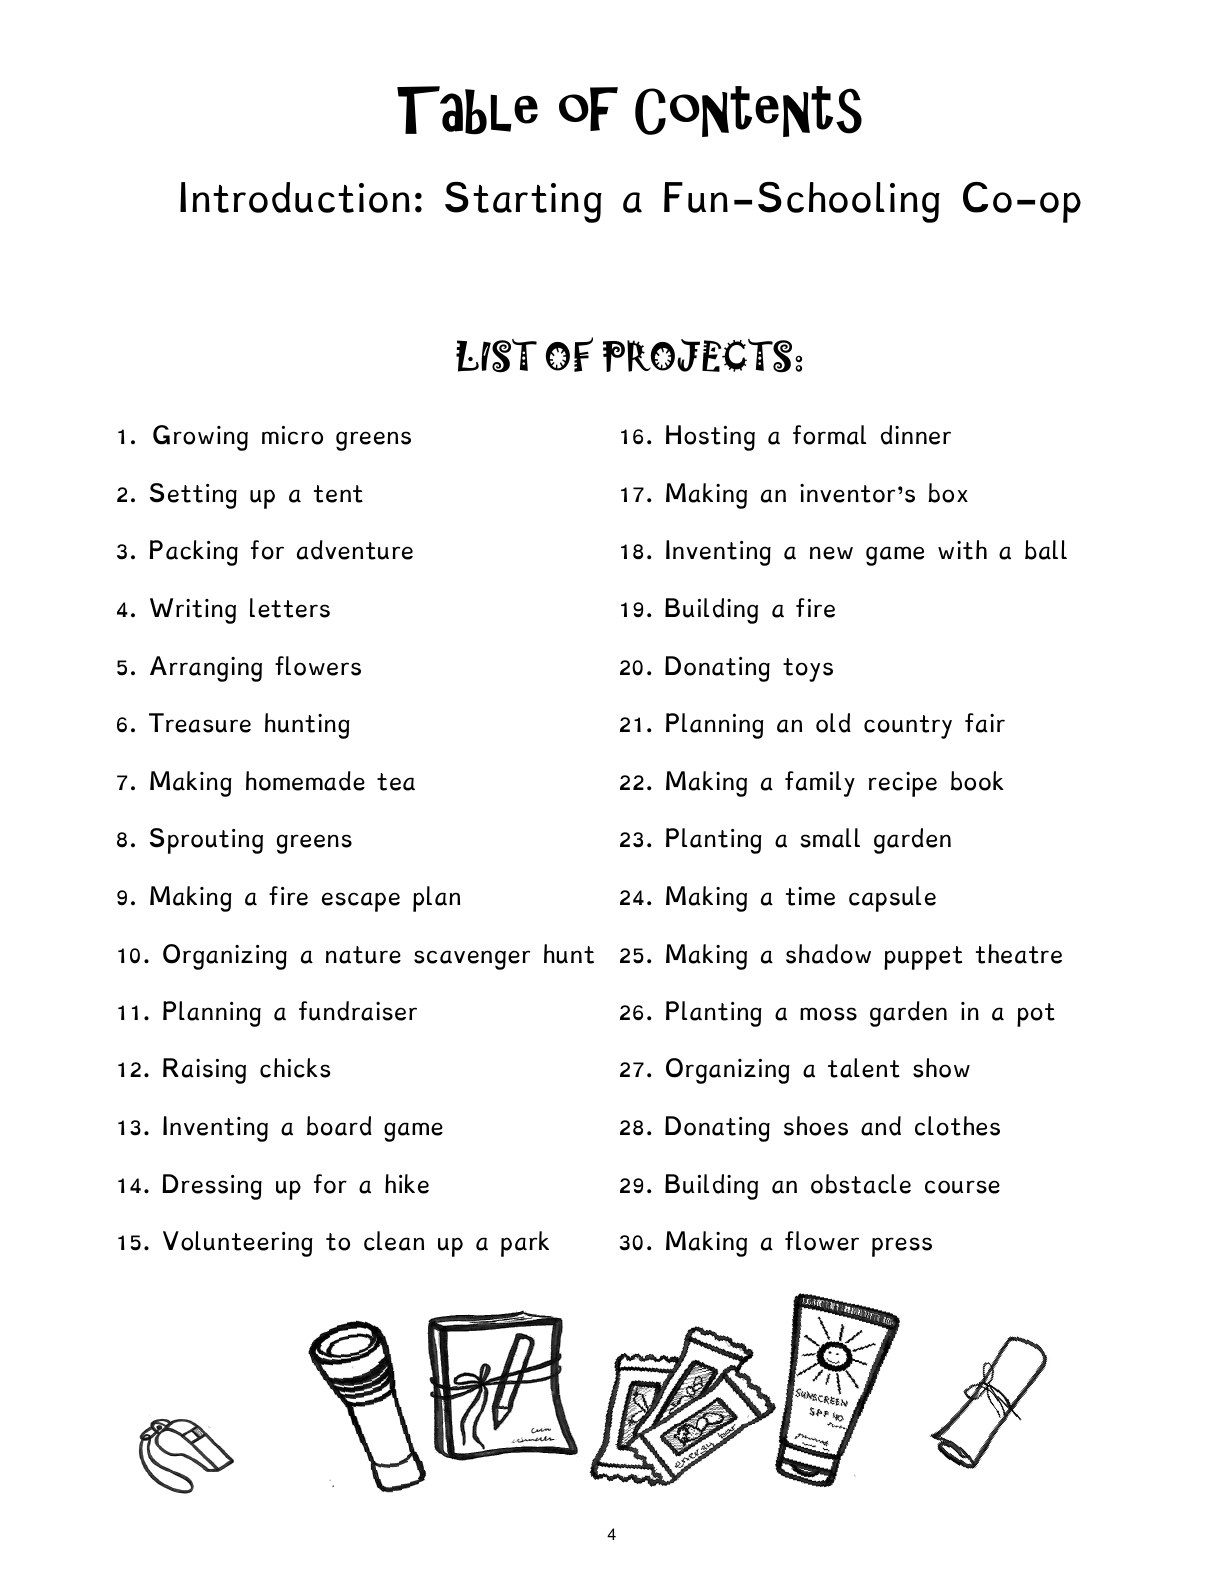 (All) 30 Fun-Schooling Projects - The Ultimate Homeschooling Co-Op Handbook